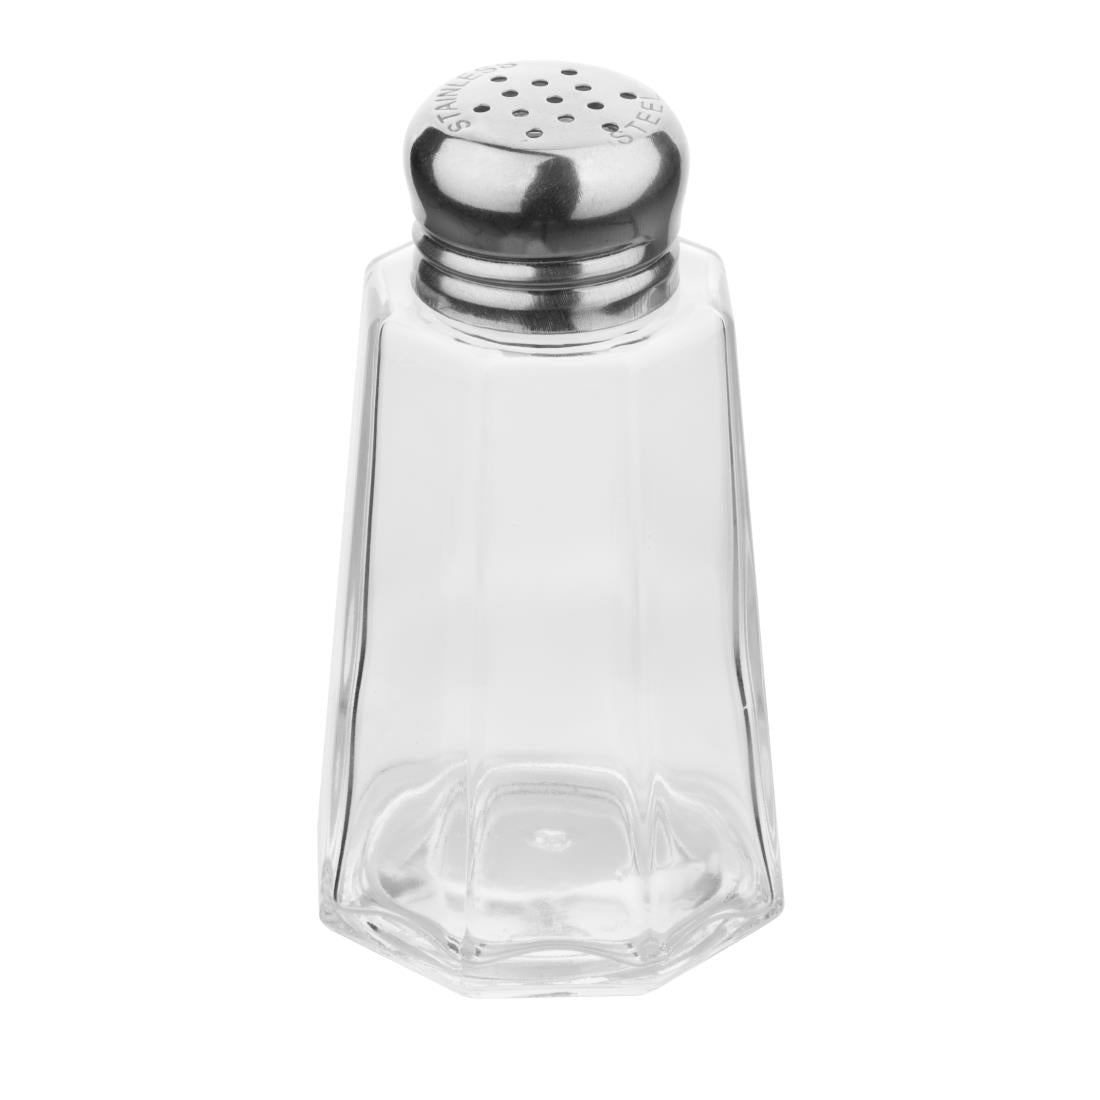 CE327 Panel Salt and Pepper Shaker (Pack of 12)